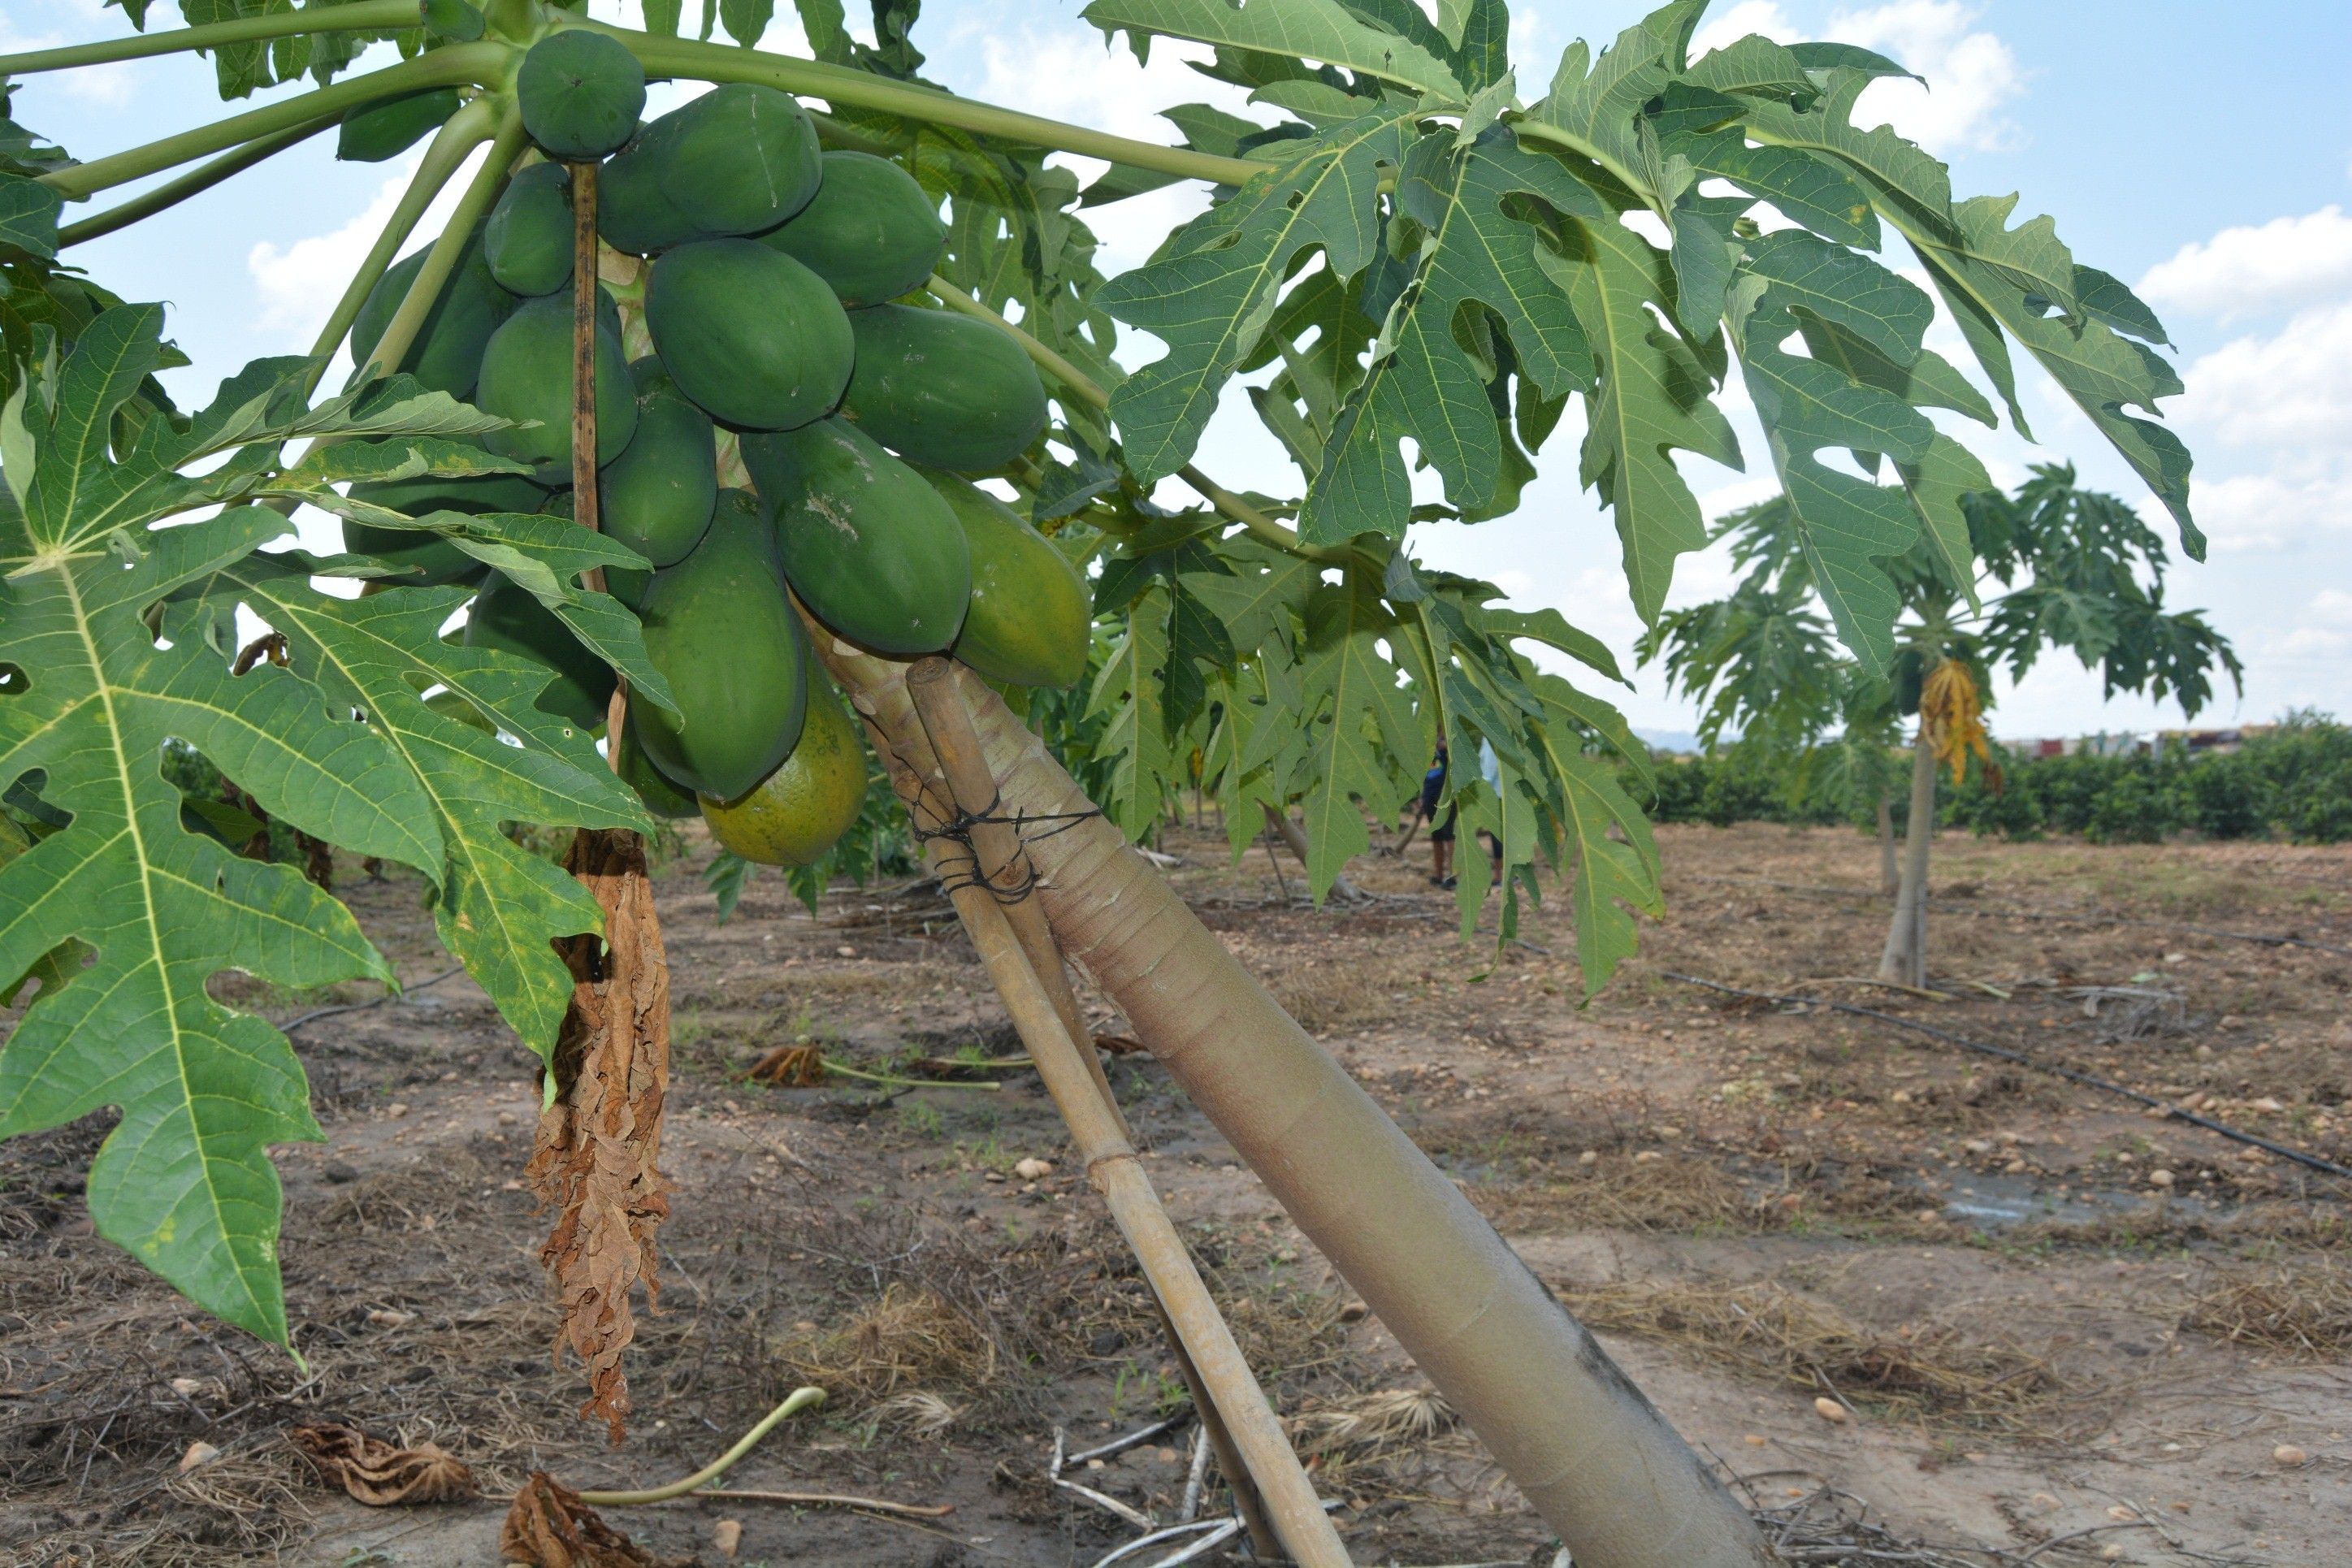 Papaya plants at the Green Horizon farm. Image by Annika McGinnis. South Sudan, 2019.